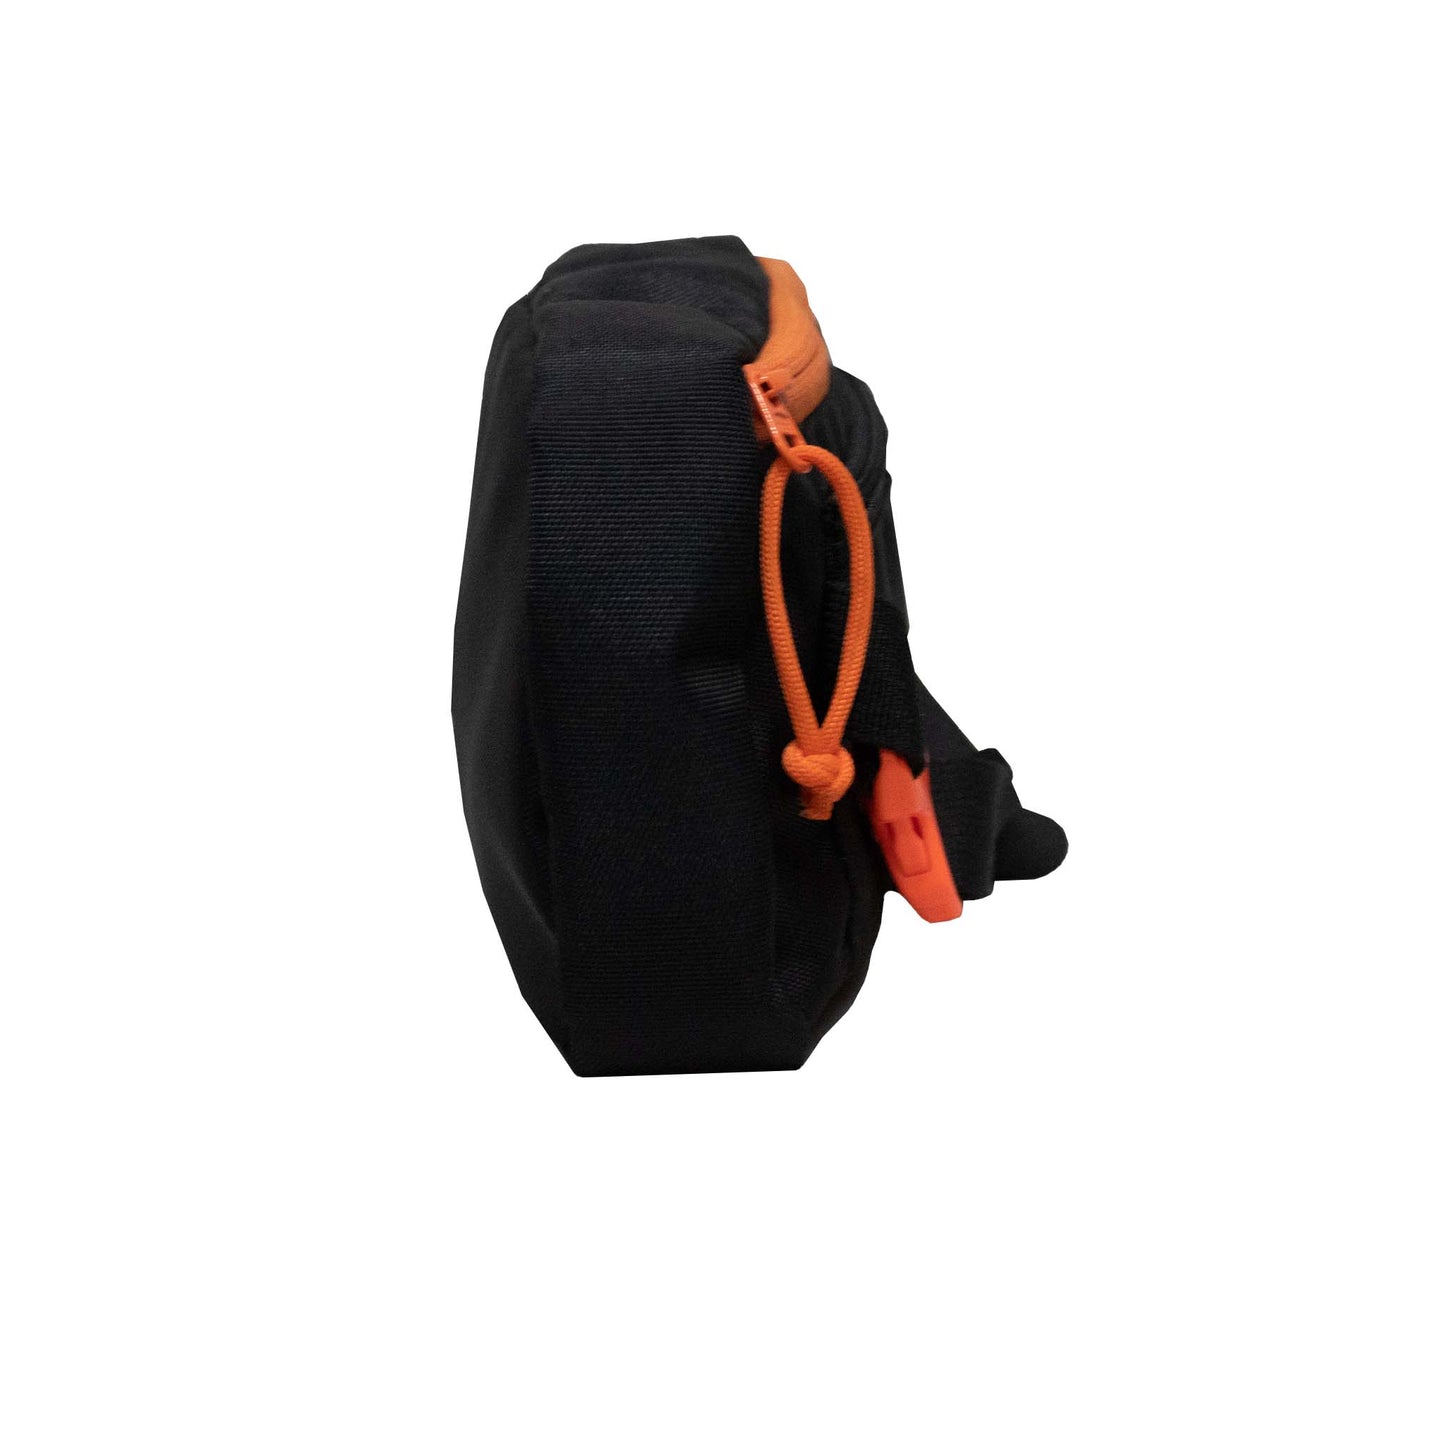 Ob Black Orange pouch